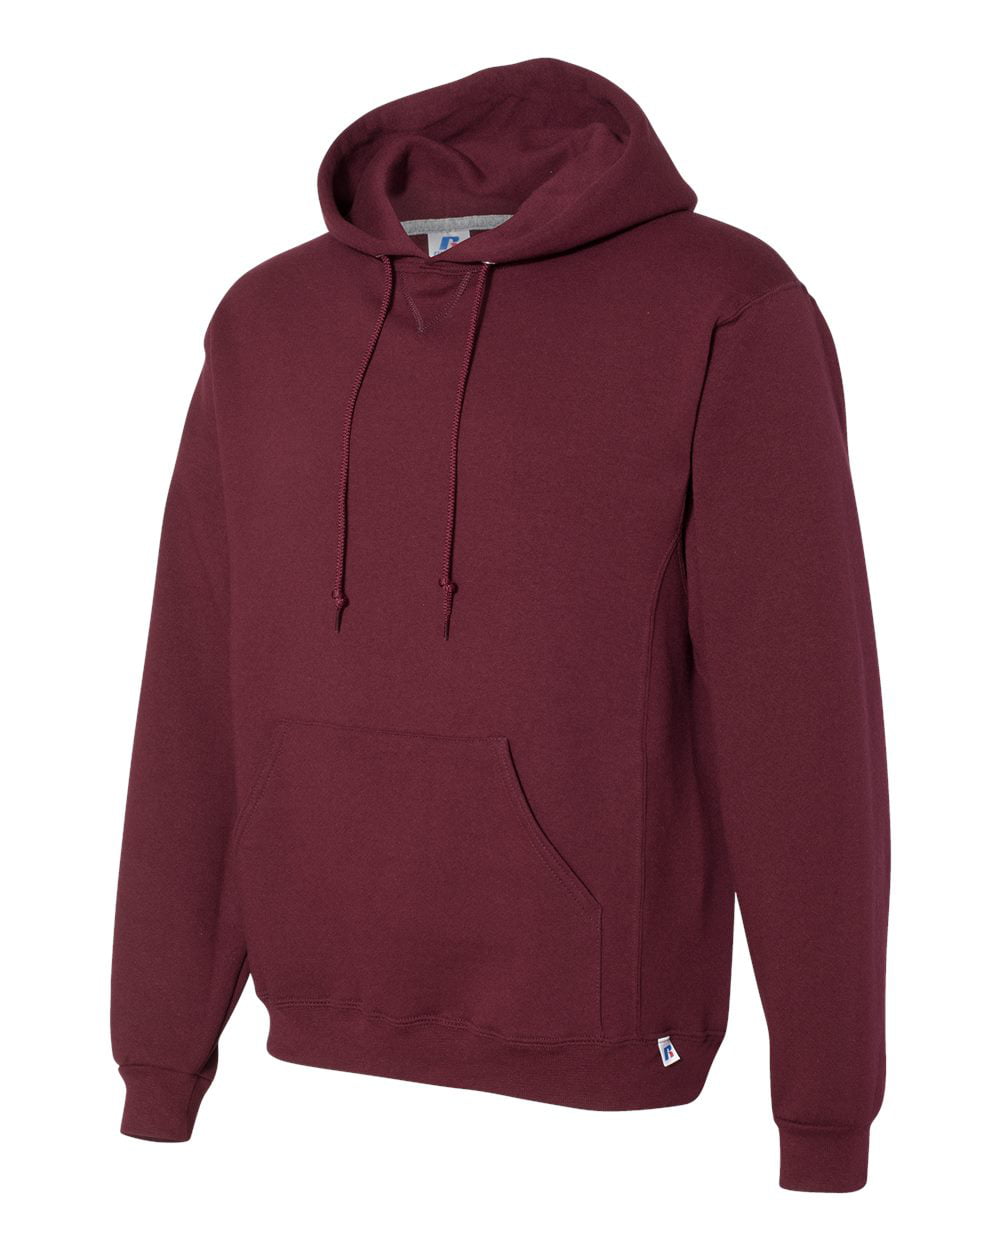 Just Hiker Male Fashion Hooded Sweatshirt Spandex-Reinforced Hoodies Pocket Waistband